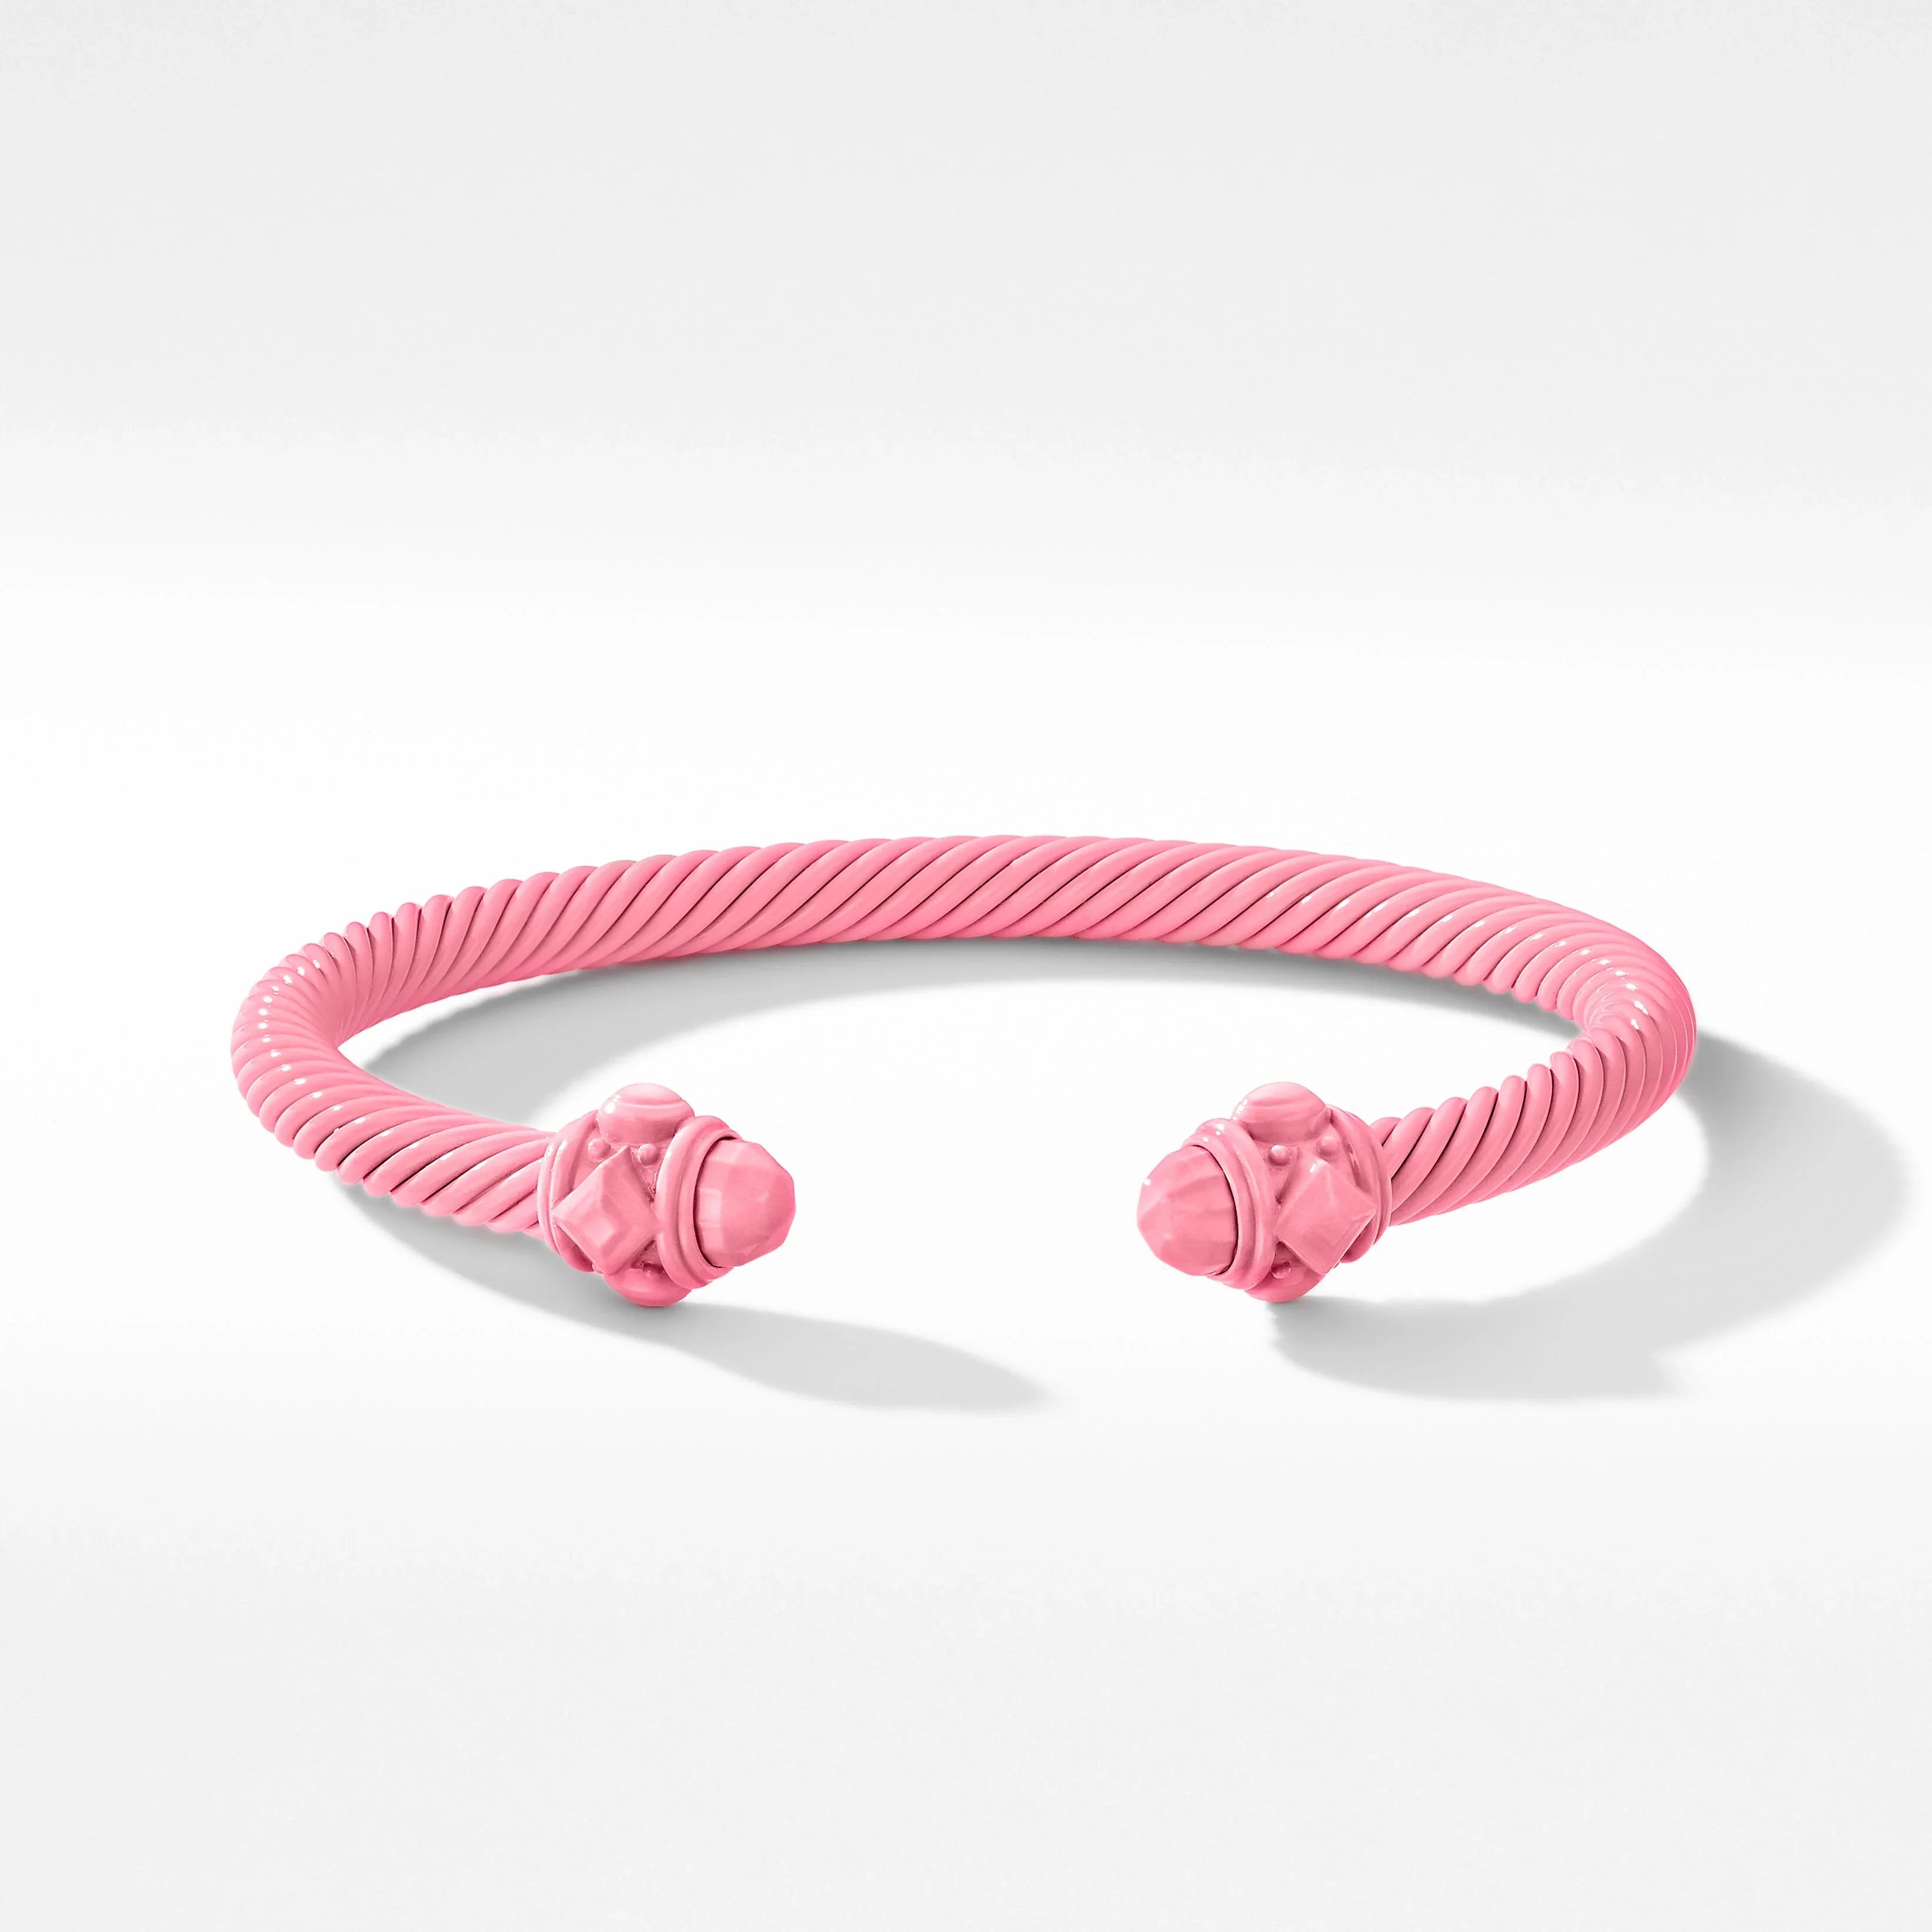 Renaissance Bracelet in Pink Aluminum | David Yurman